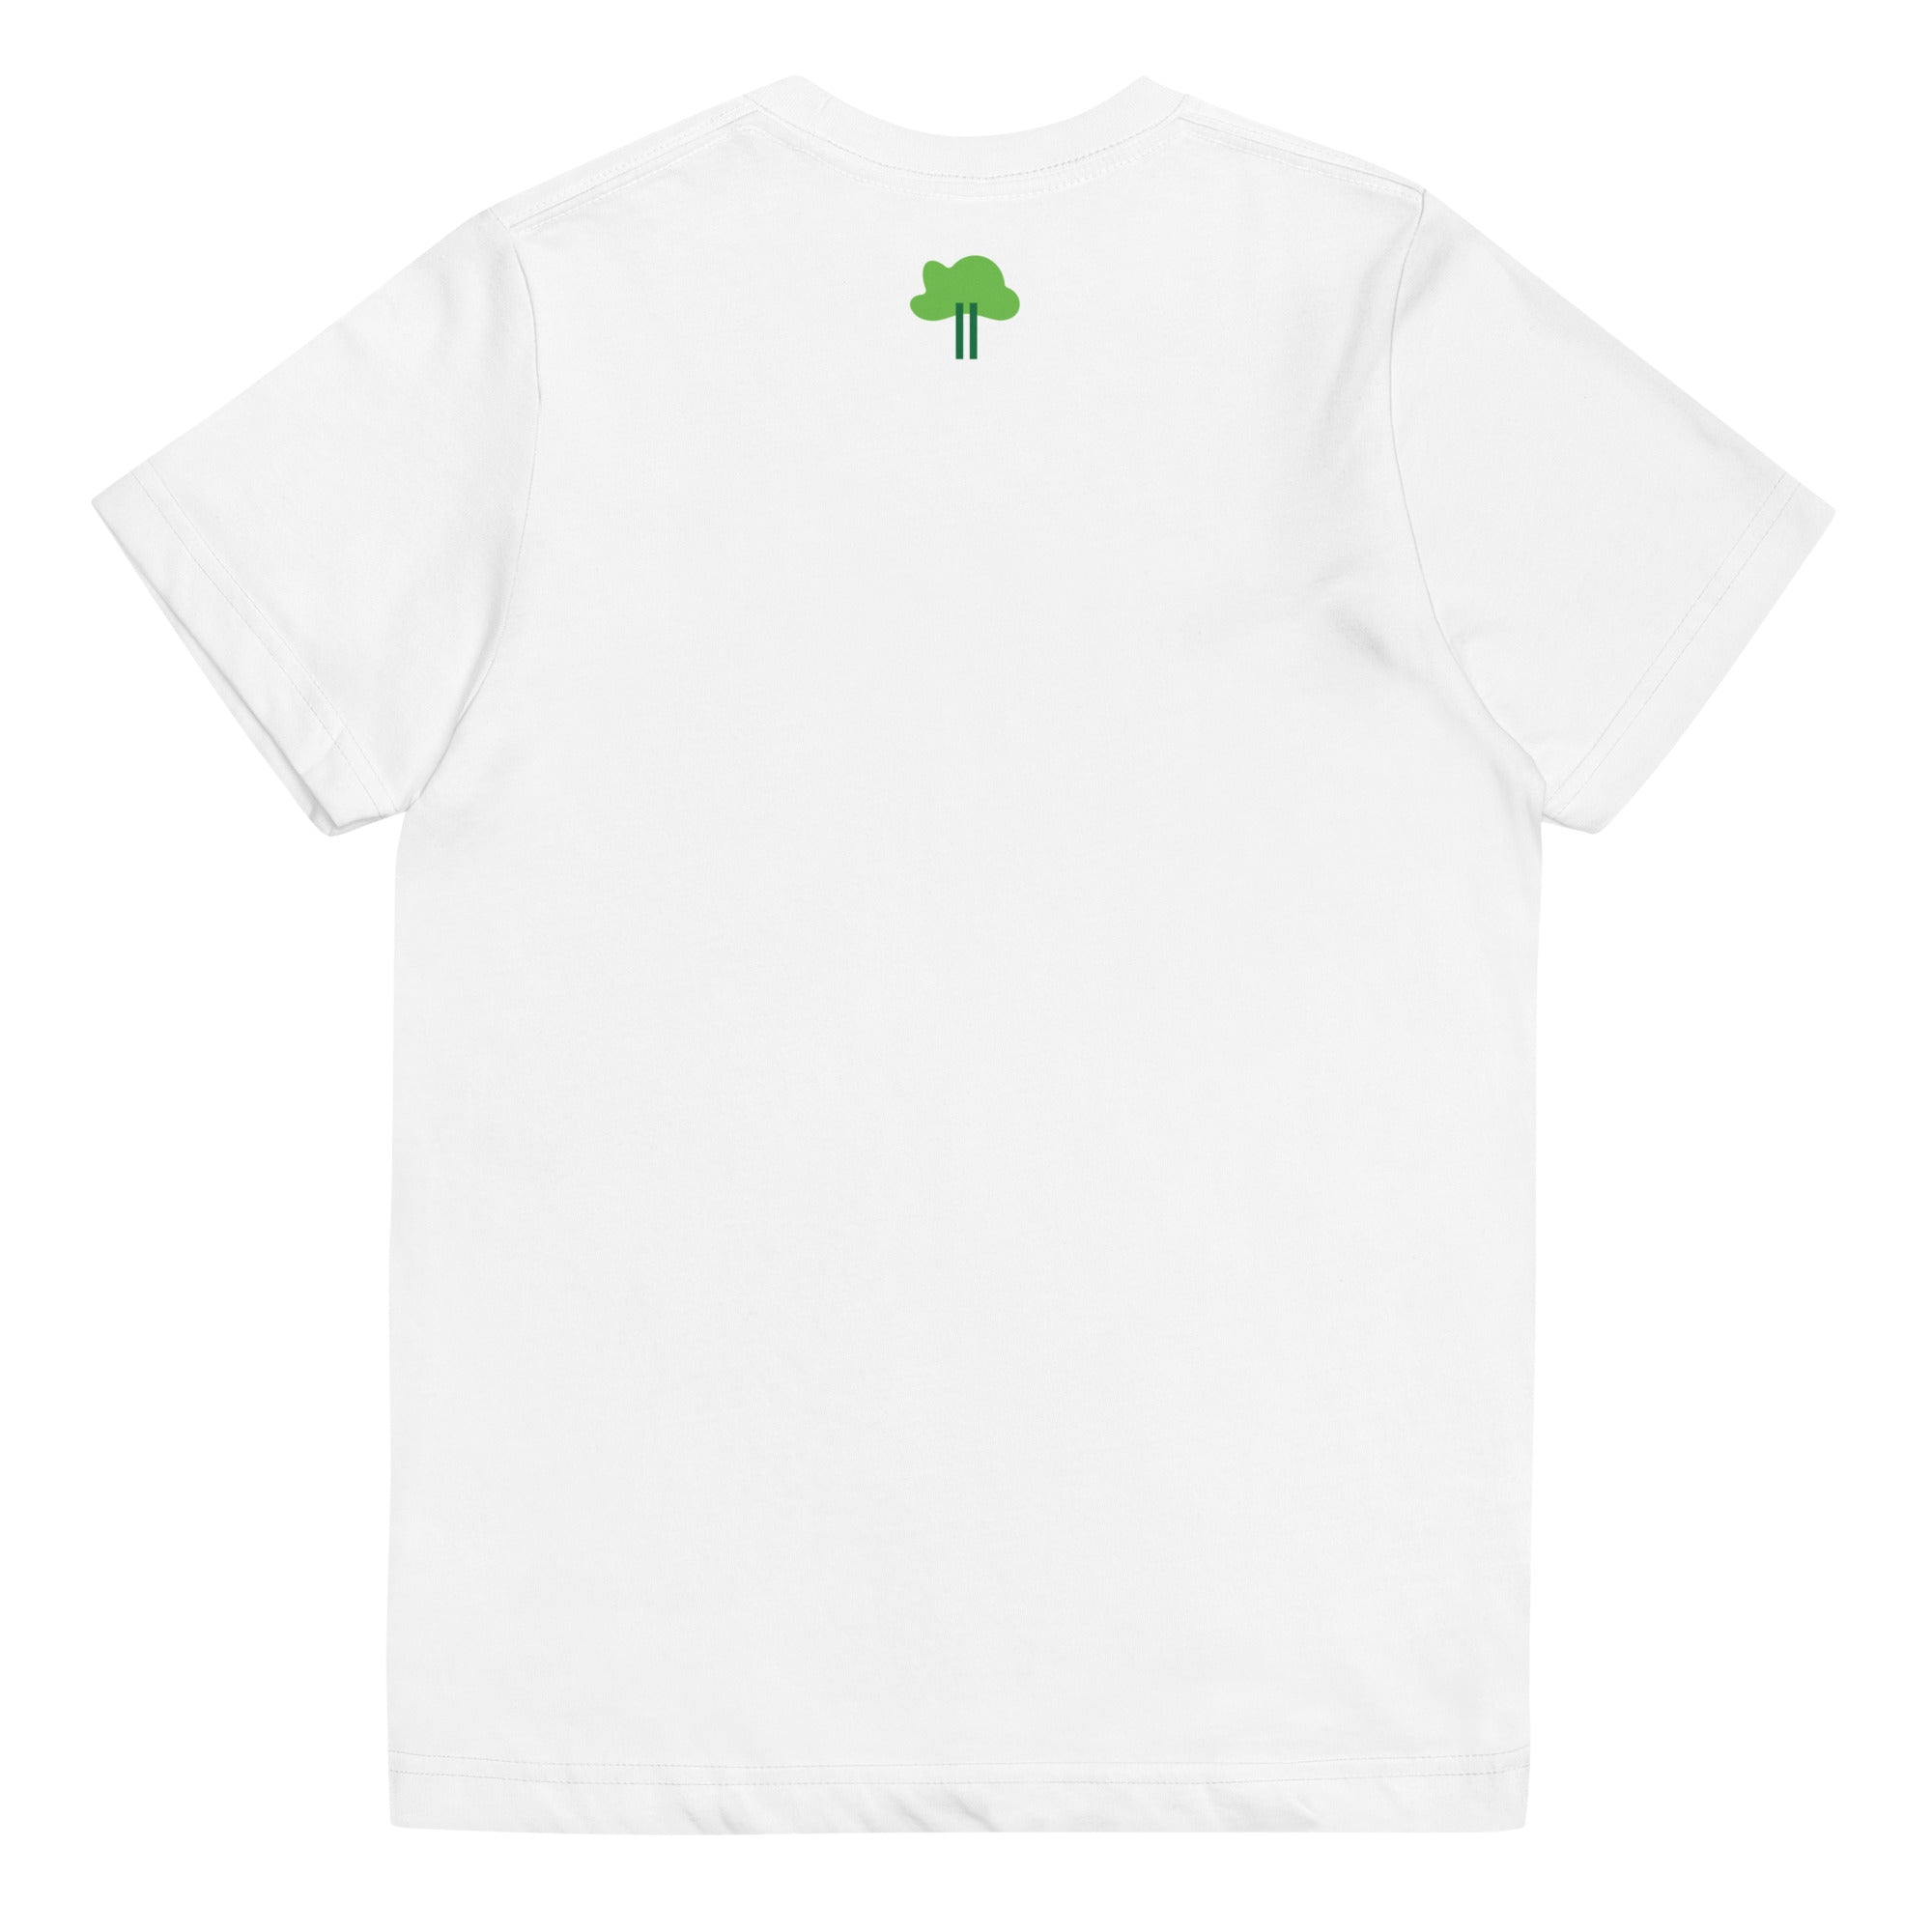 I Temp - CIT | Youth jersey t-shirt